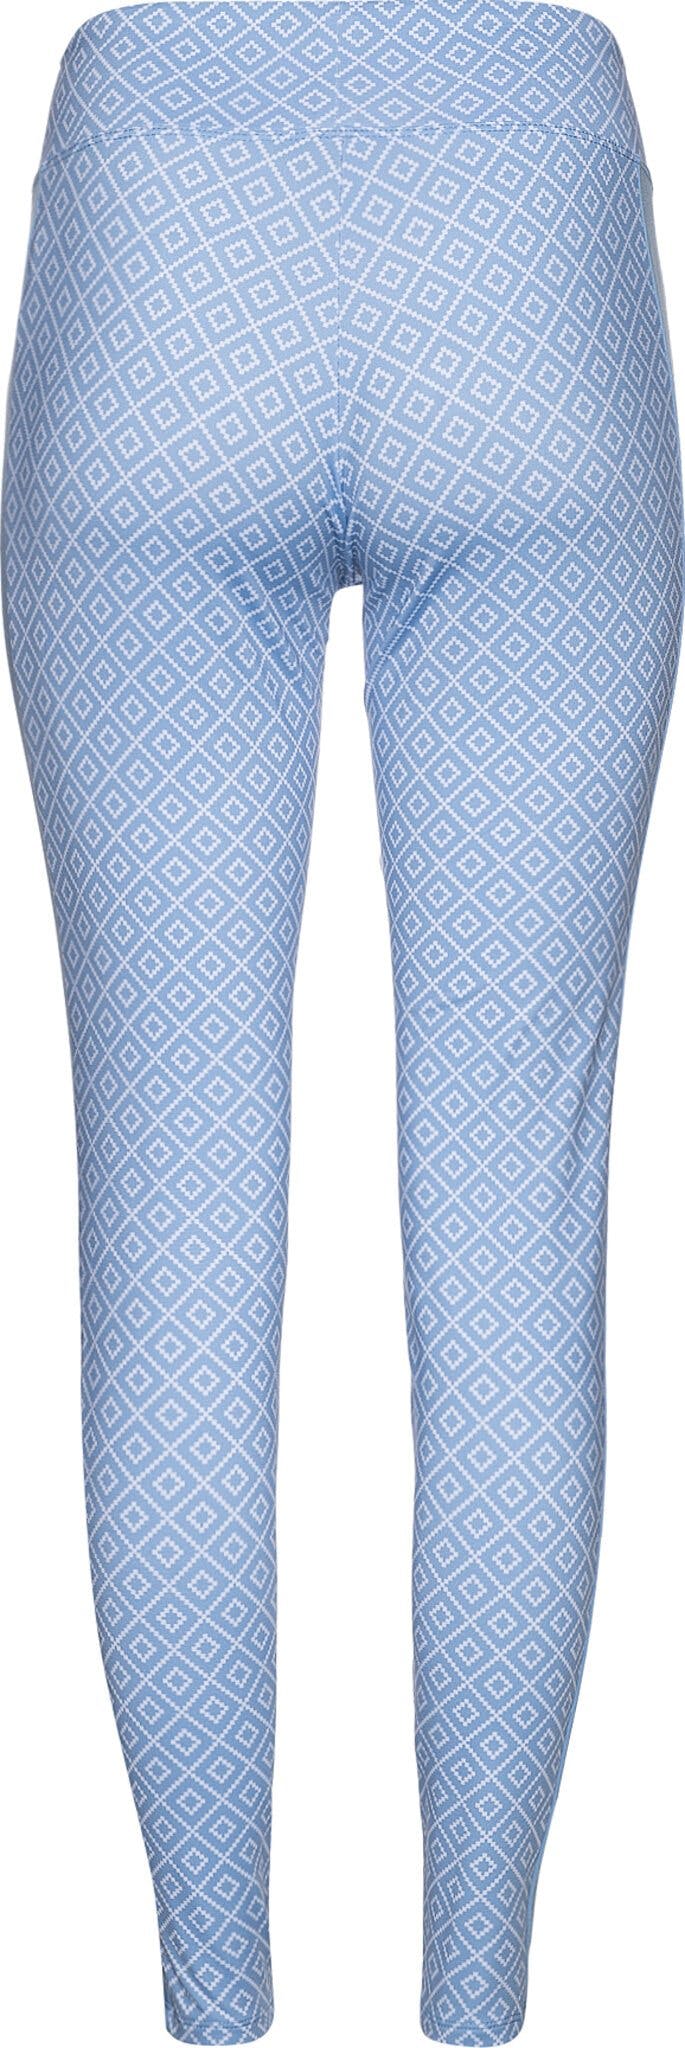 Product gallery image number 2 for product Meribel Elastic Waistband Printed Leggings - Women's